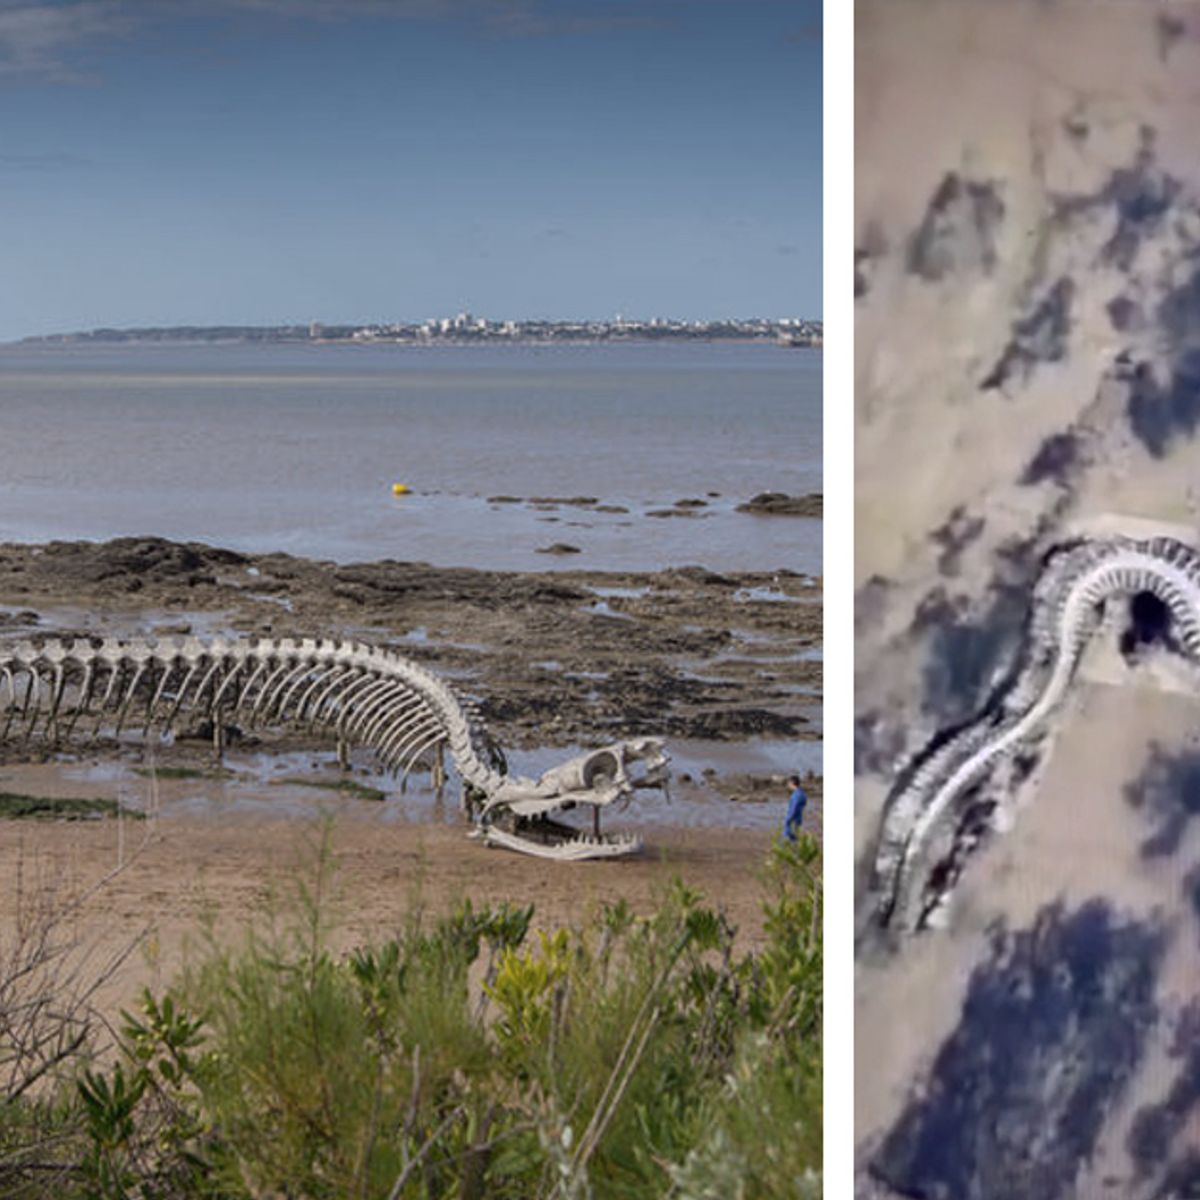 Giant Snake Skeleton on Google Maps: Real or Fake